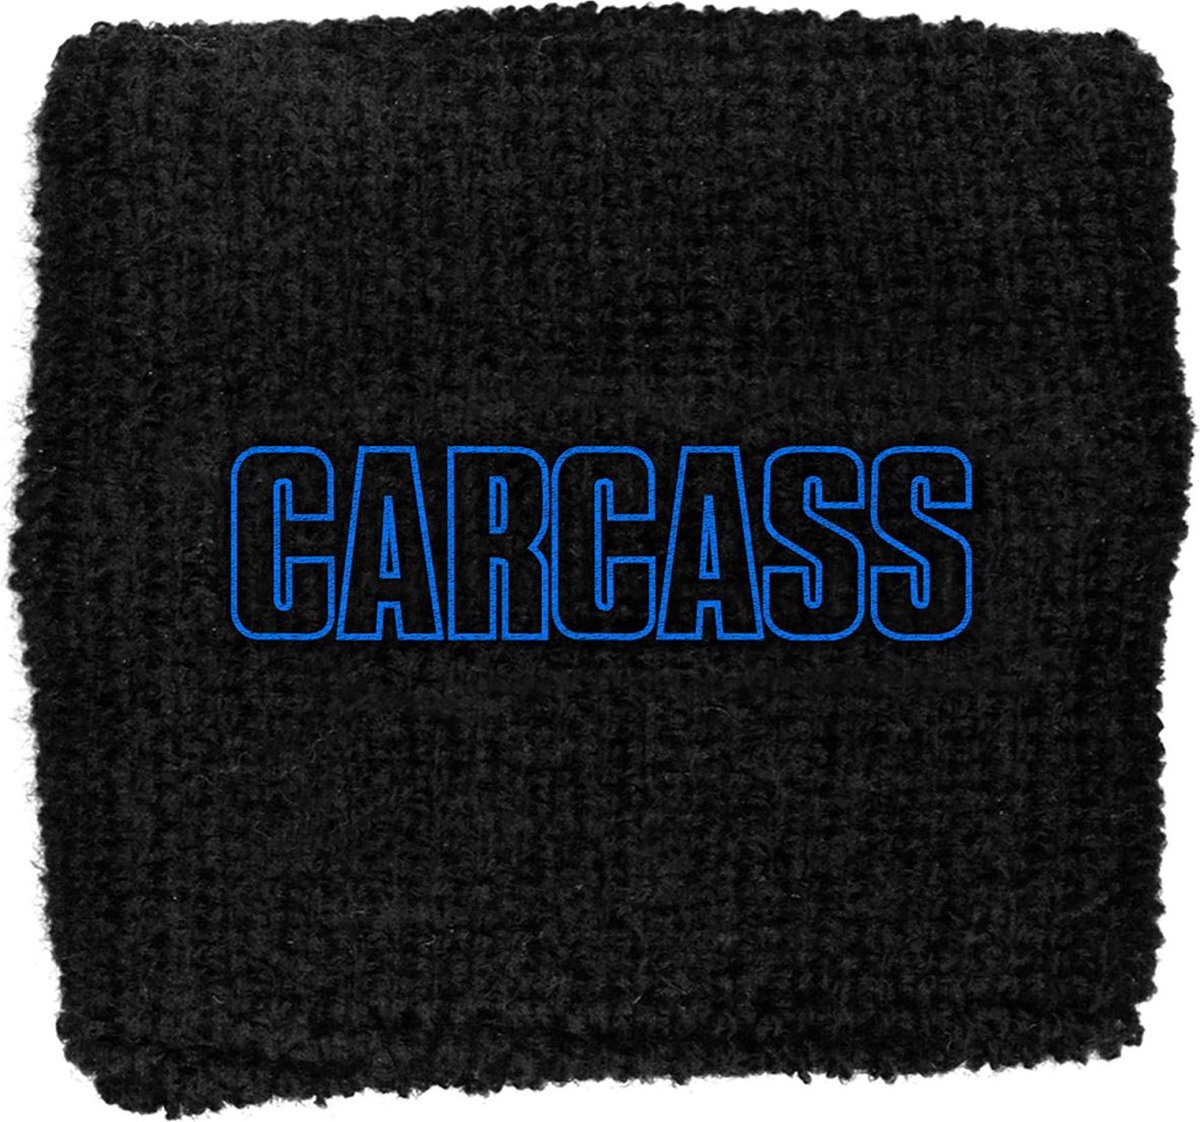 Carcass - Logo - wristband zweetbandje